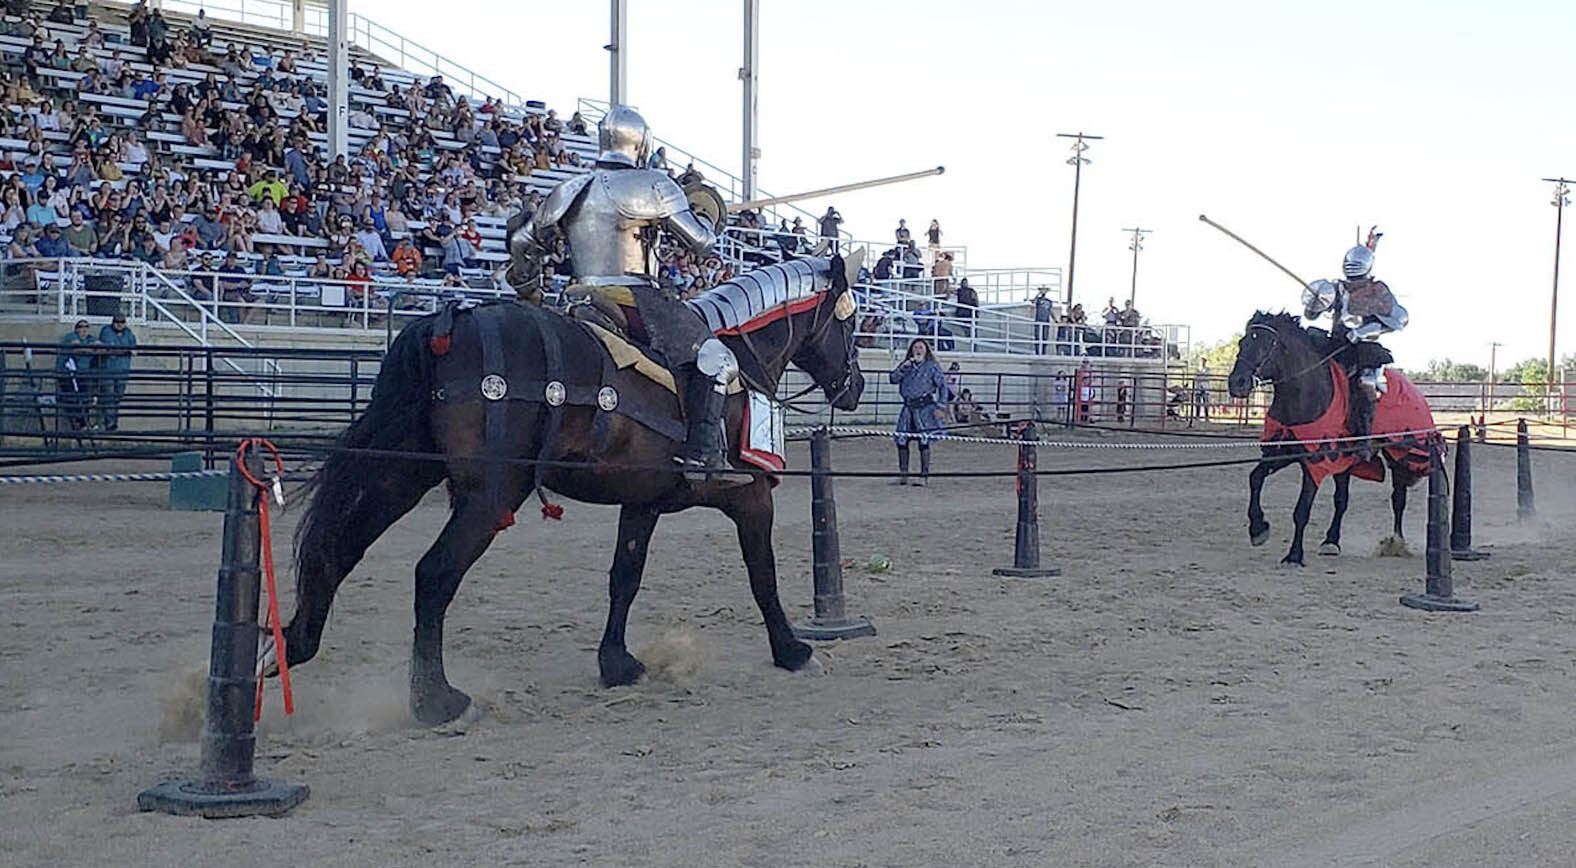 medieval jousting horse